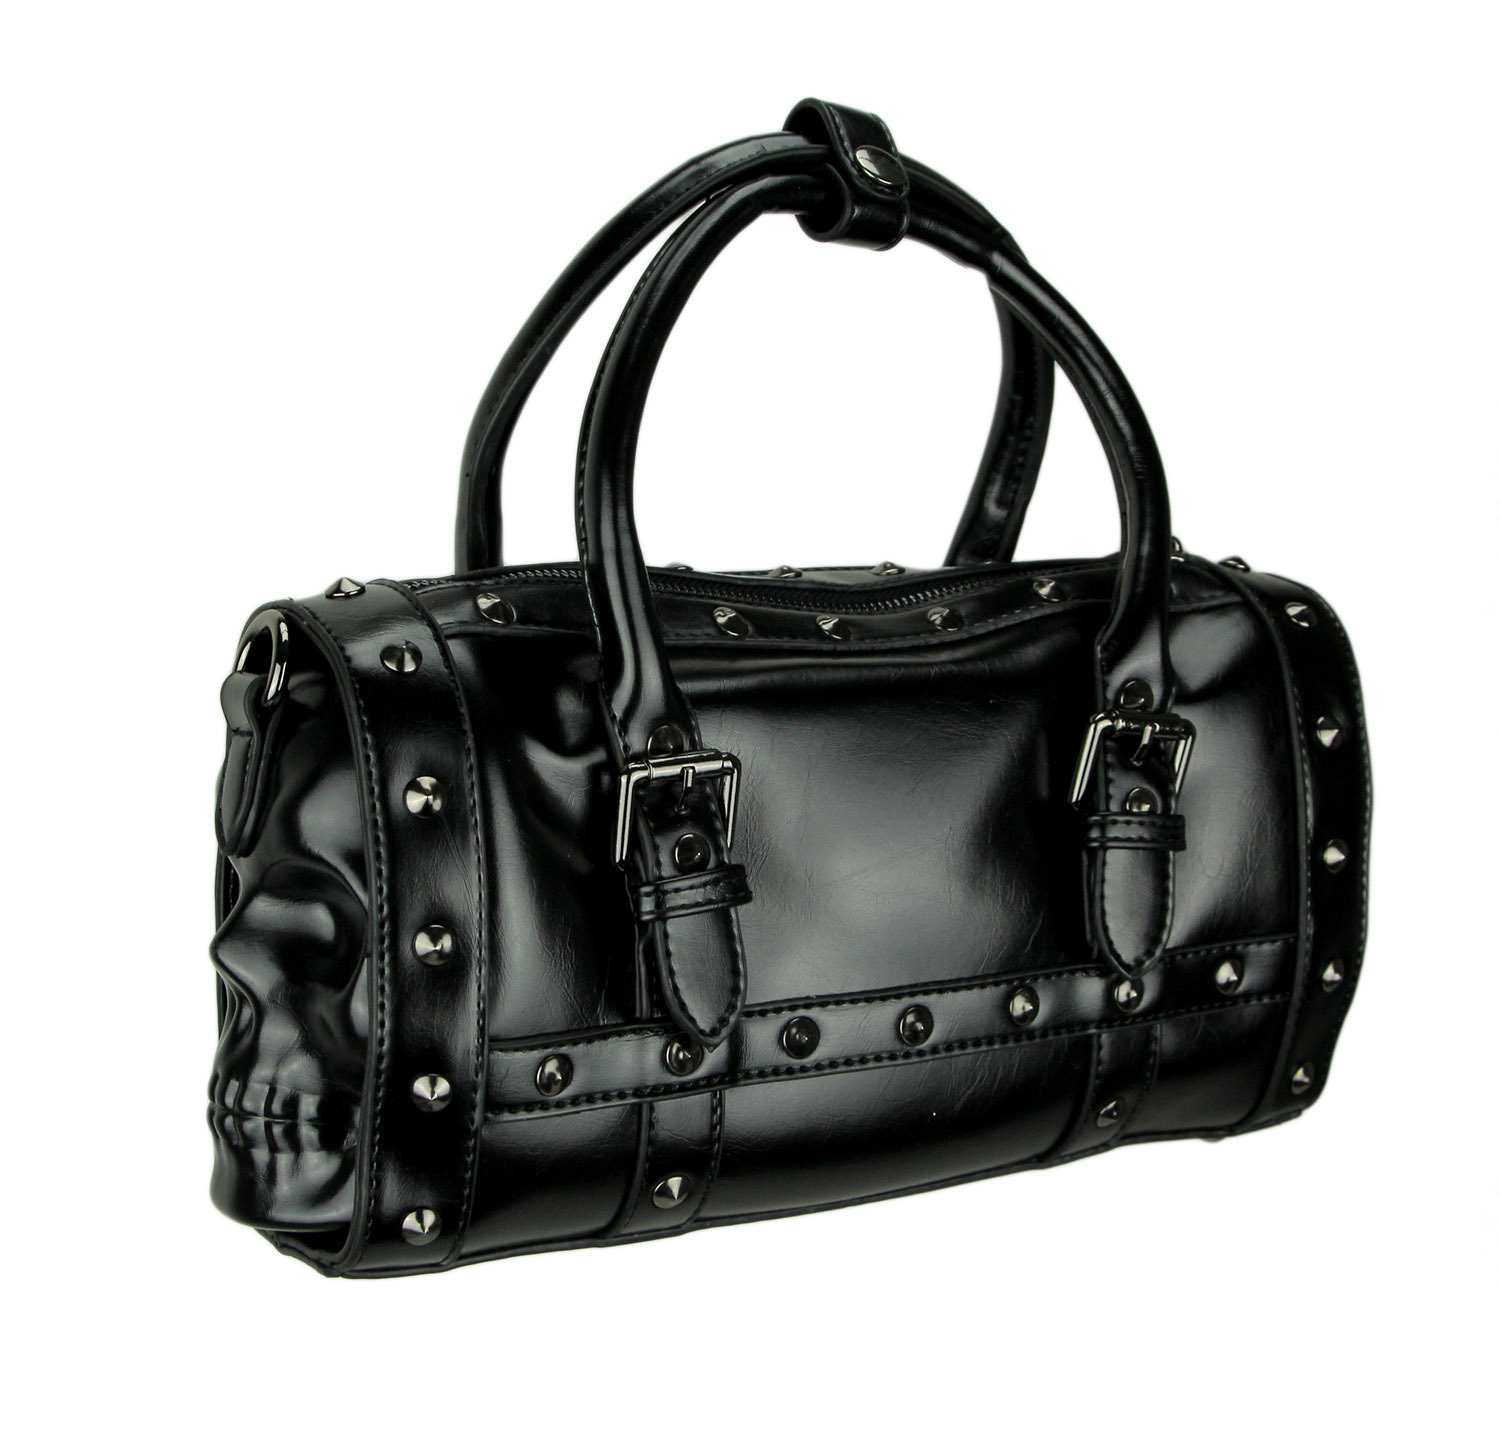 Primary image for Black Studded Double Skull Satchel Handbag